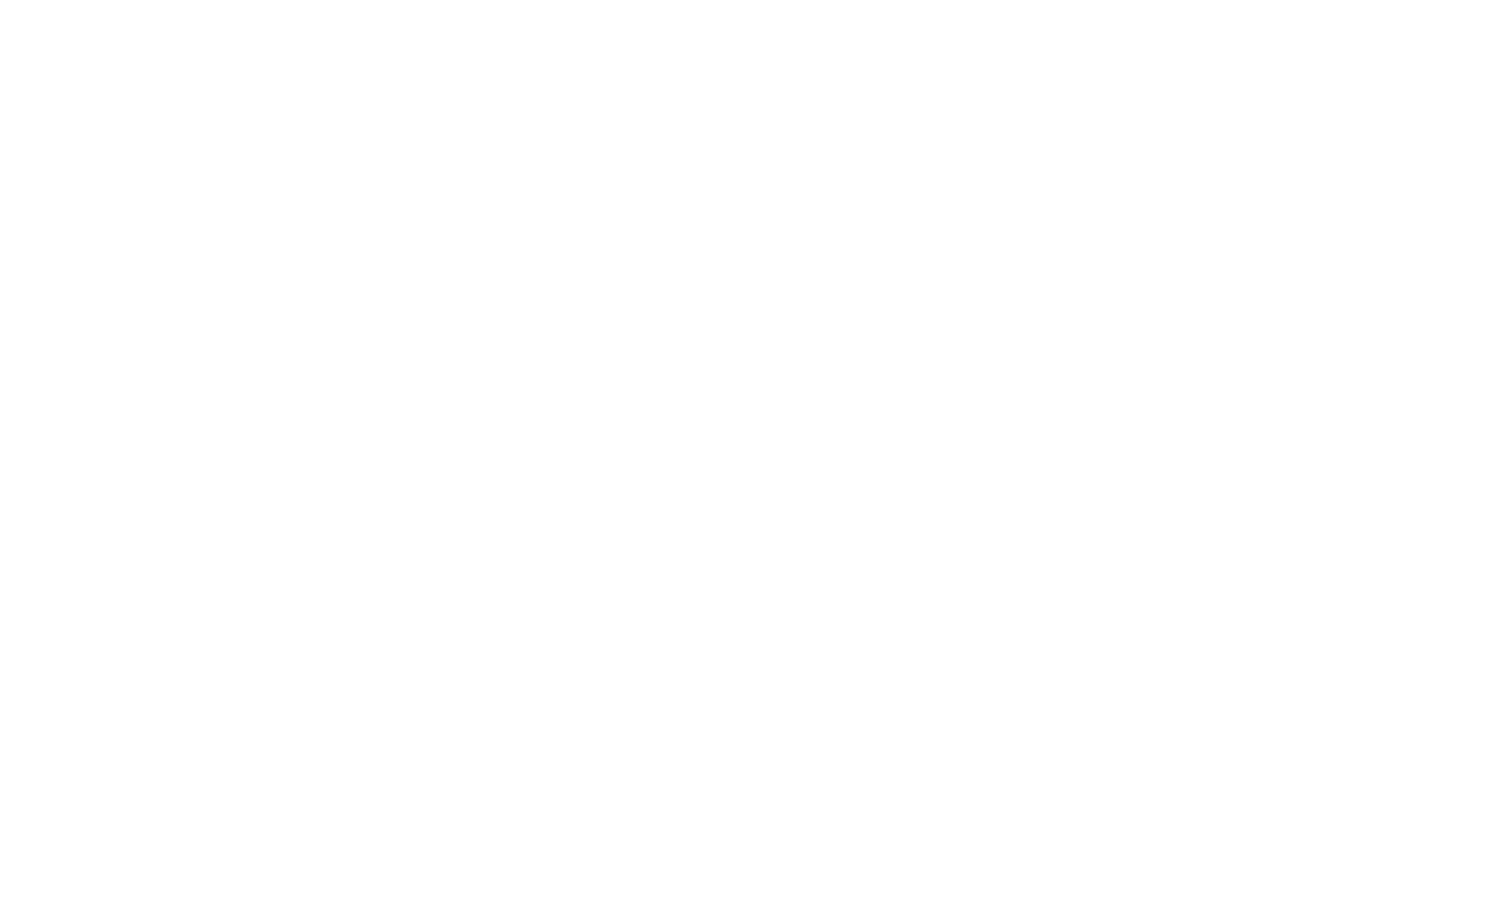 Flagg Coastal Homes